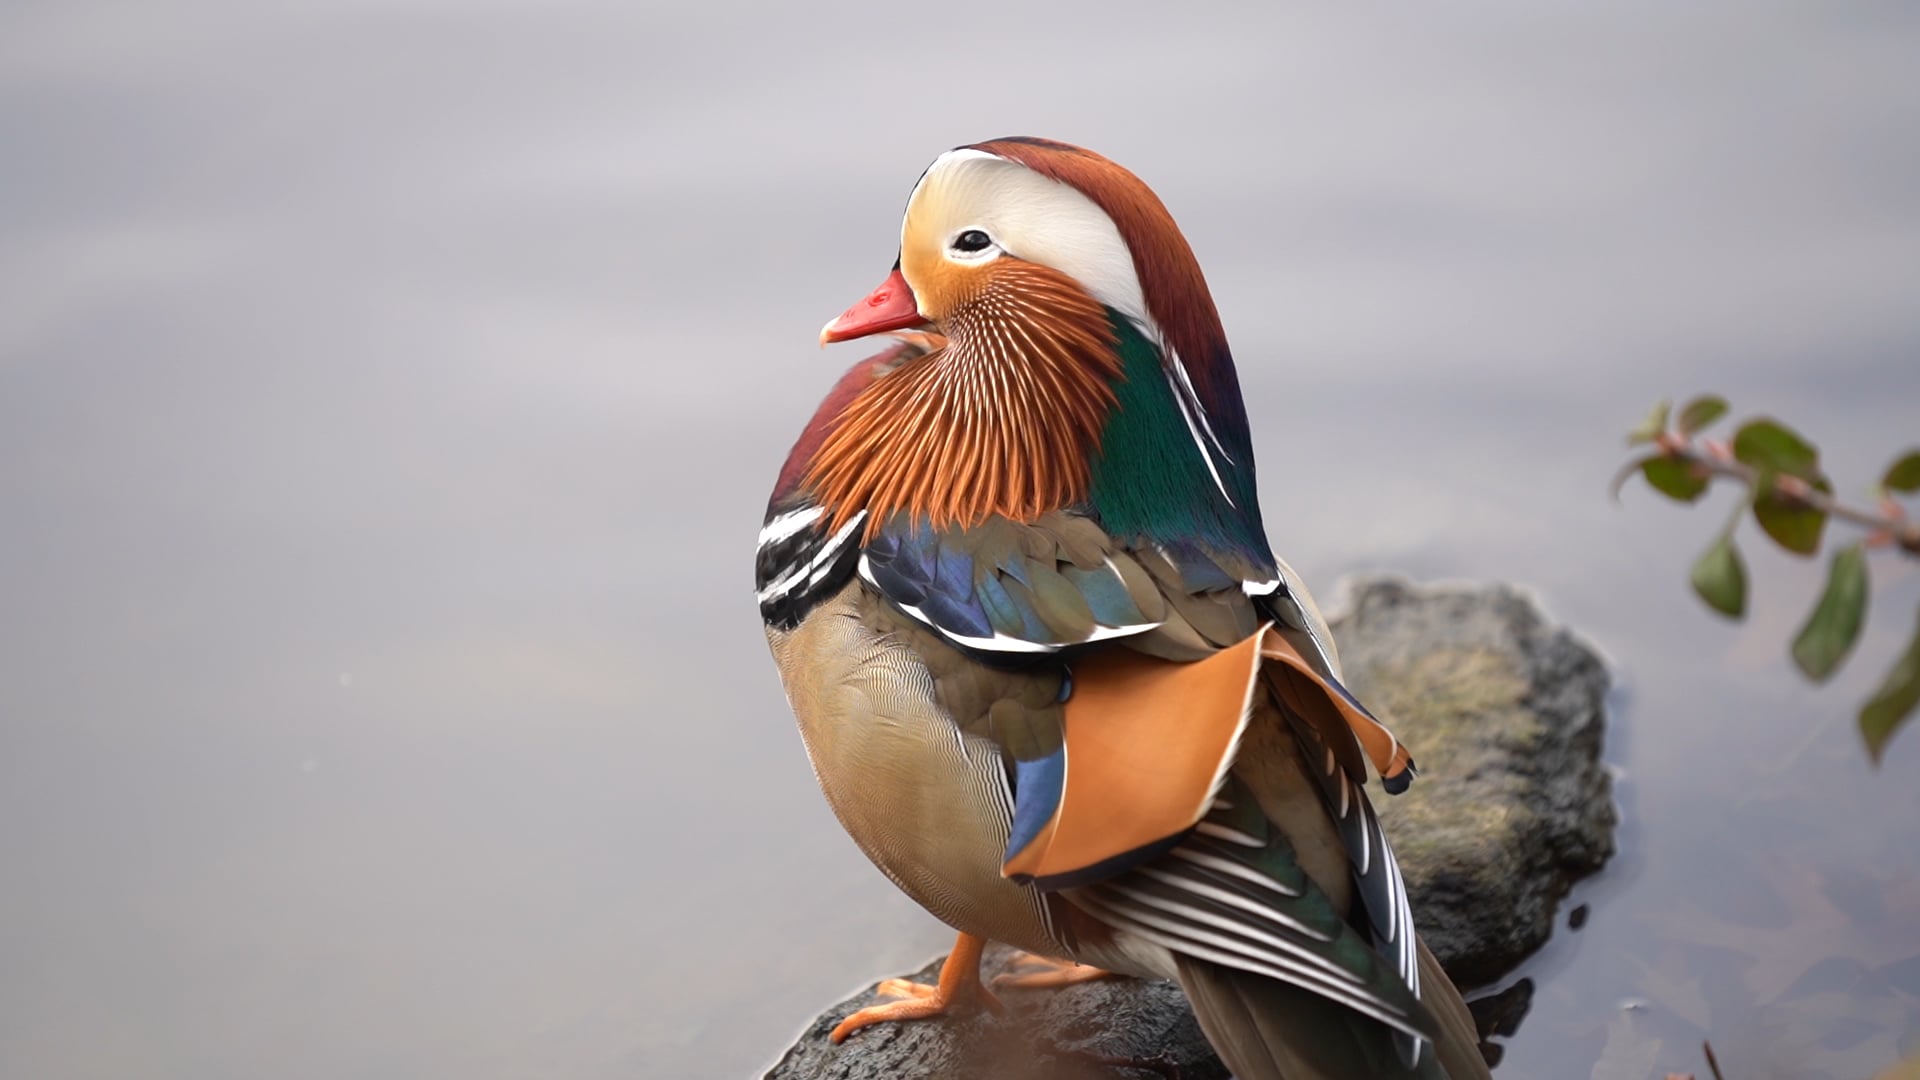 SCMP: The Mandarin Duck: New York’s most surprising celebrity